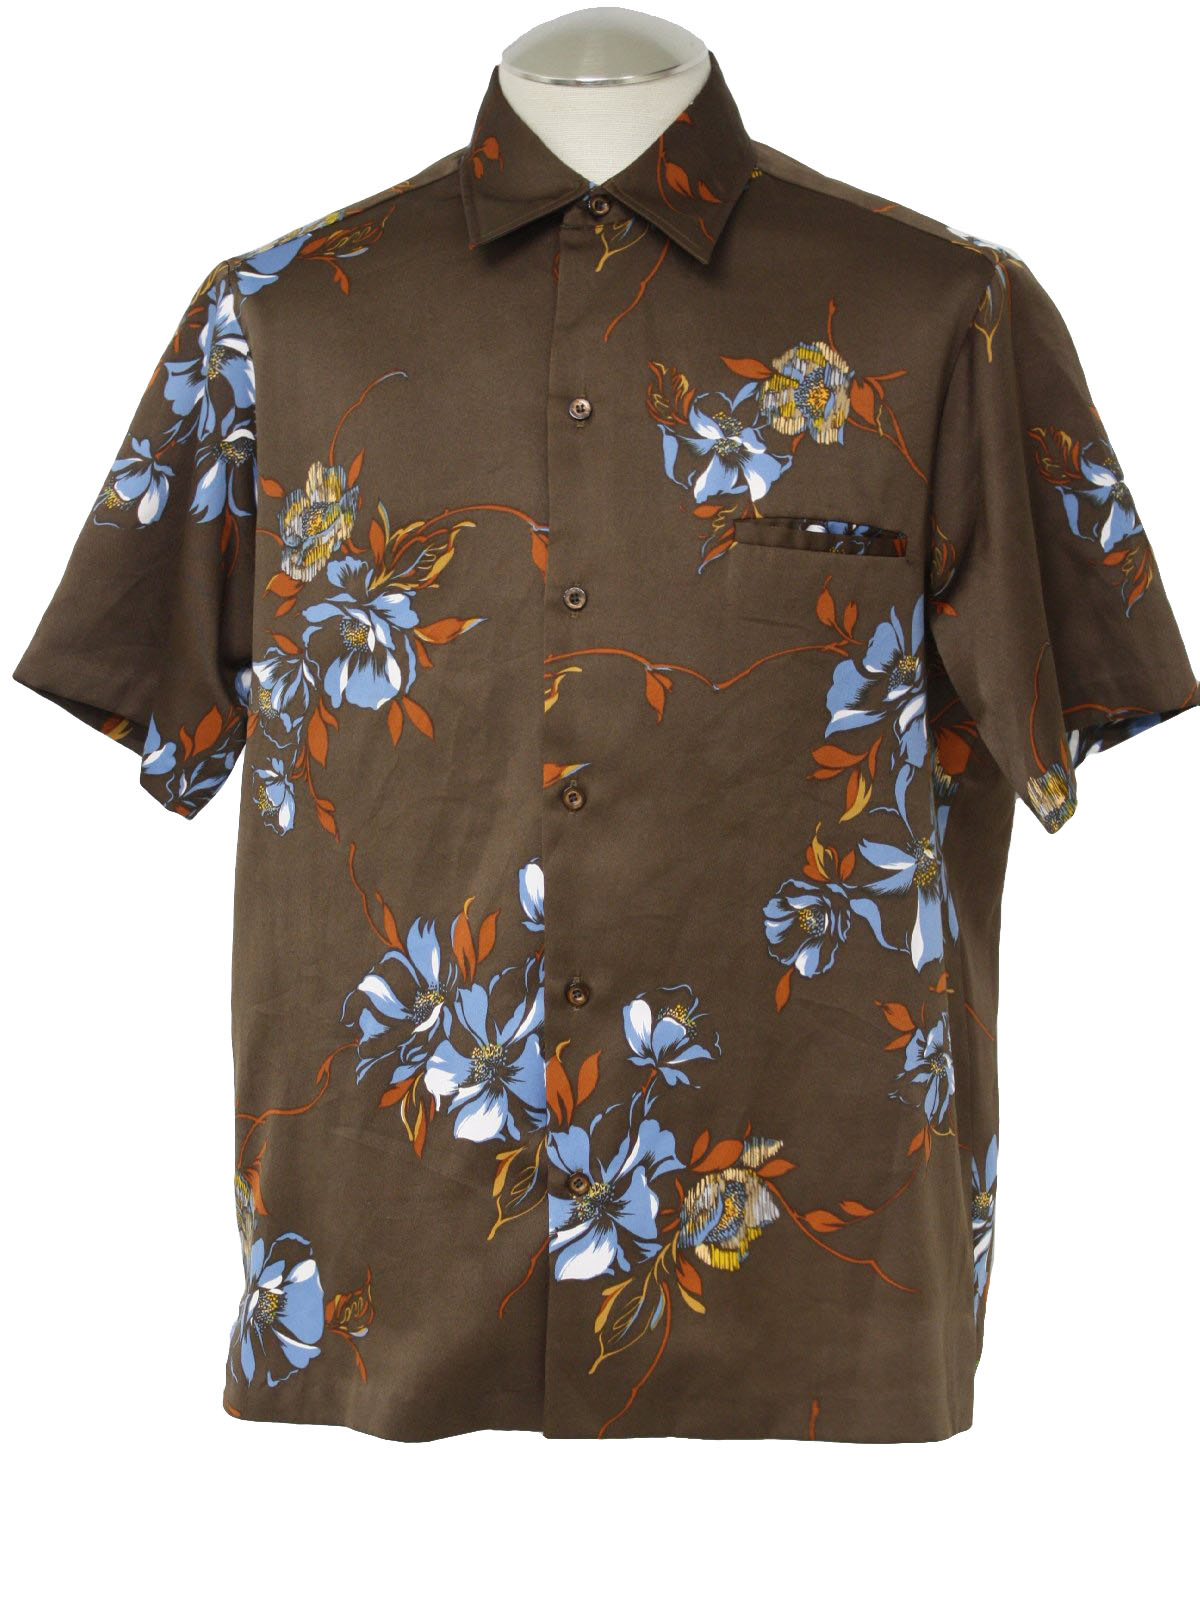 Tori Richard 70's Vintage Hawaiian Shirt: 70s -Tori Richard- Mens brown ...